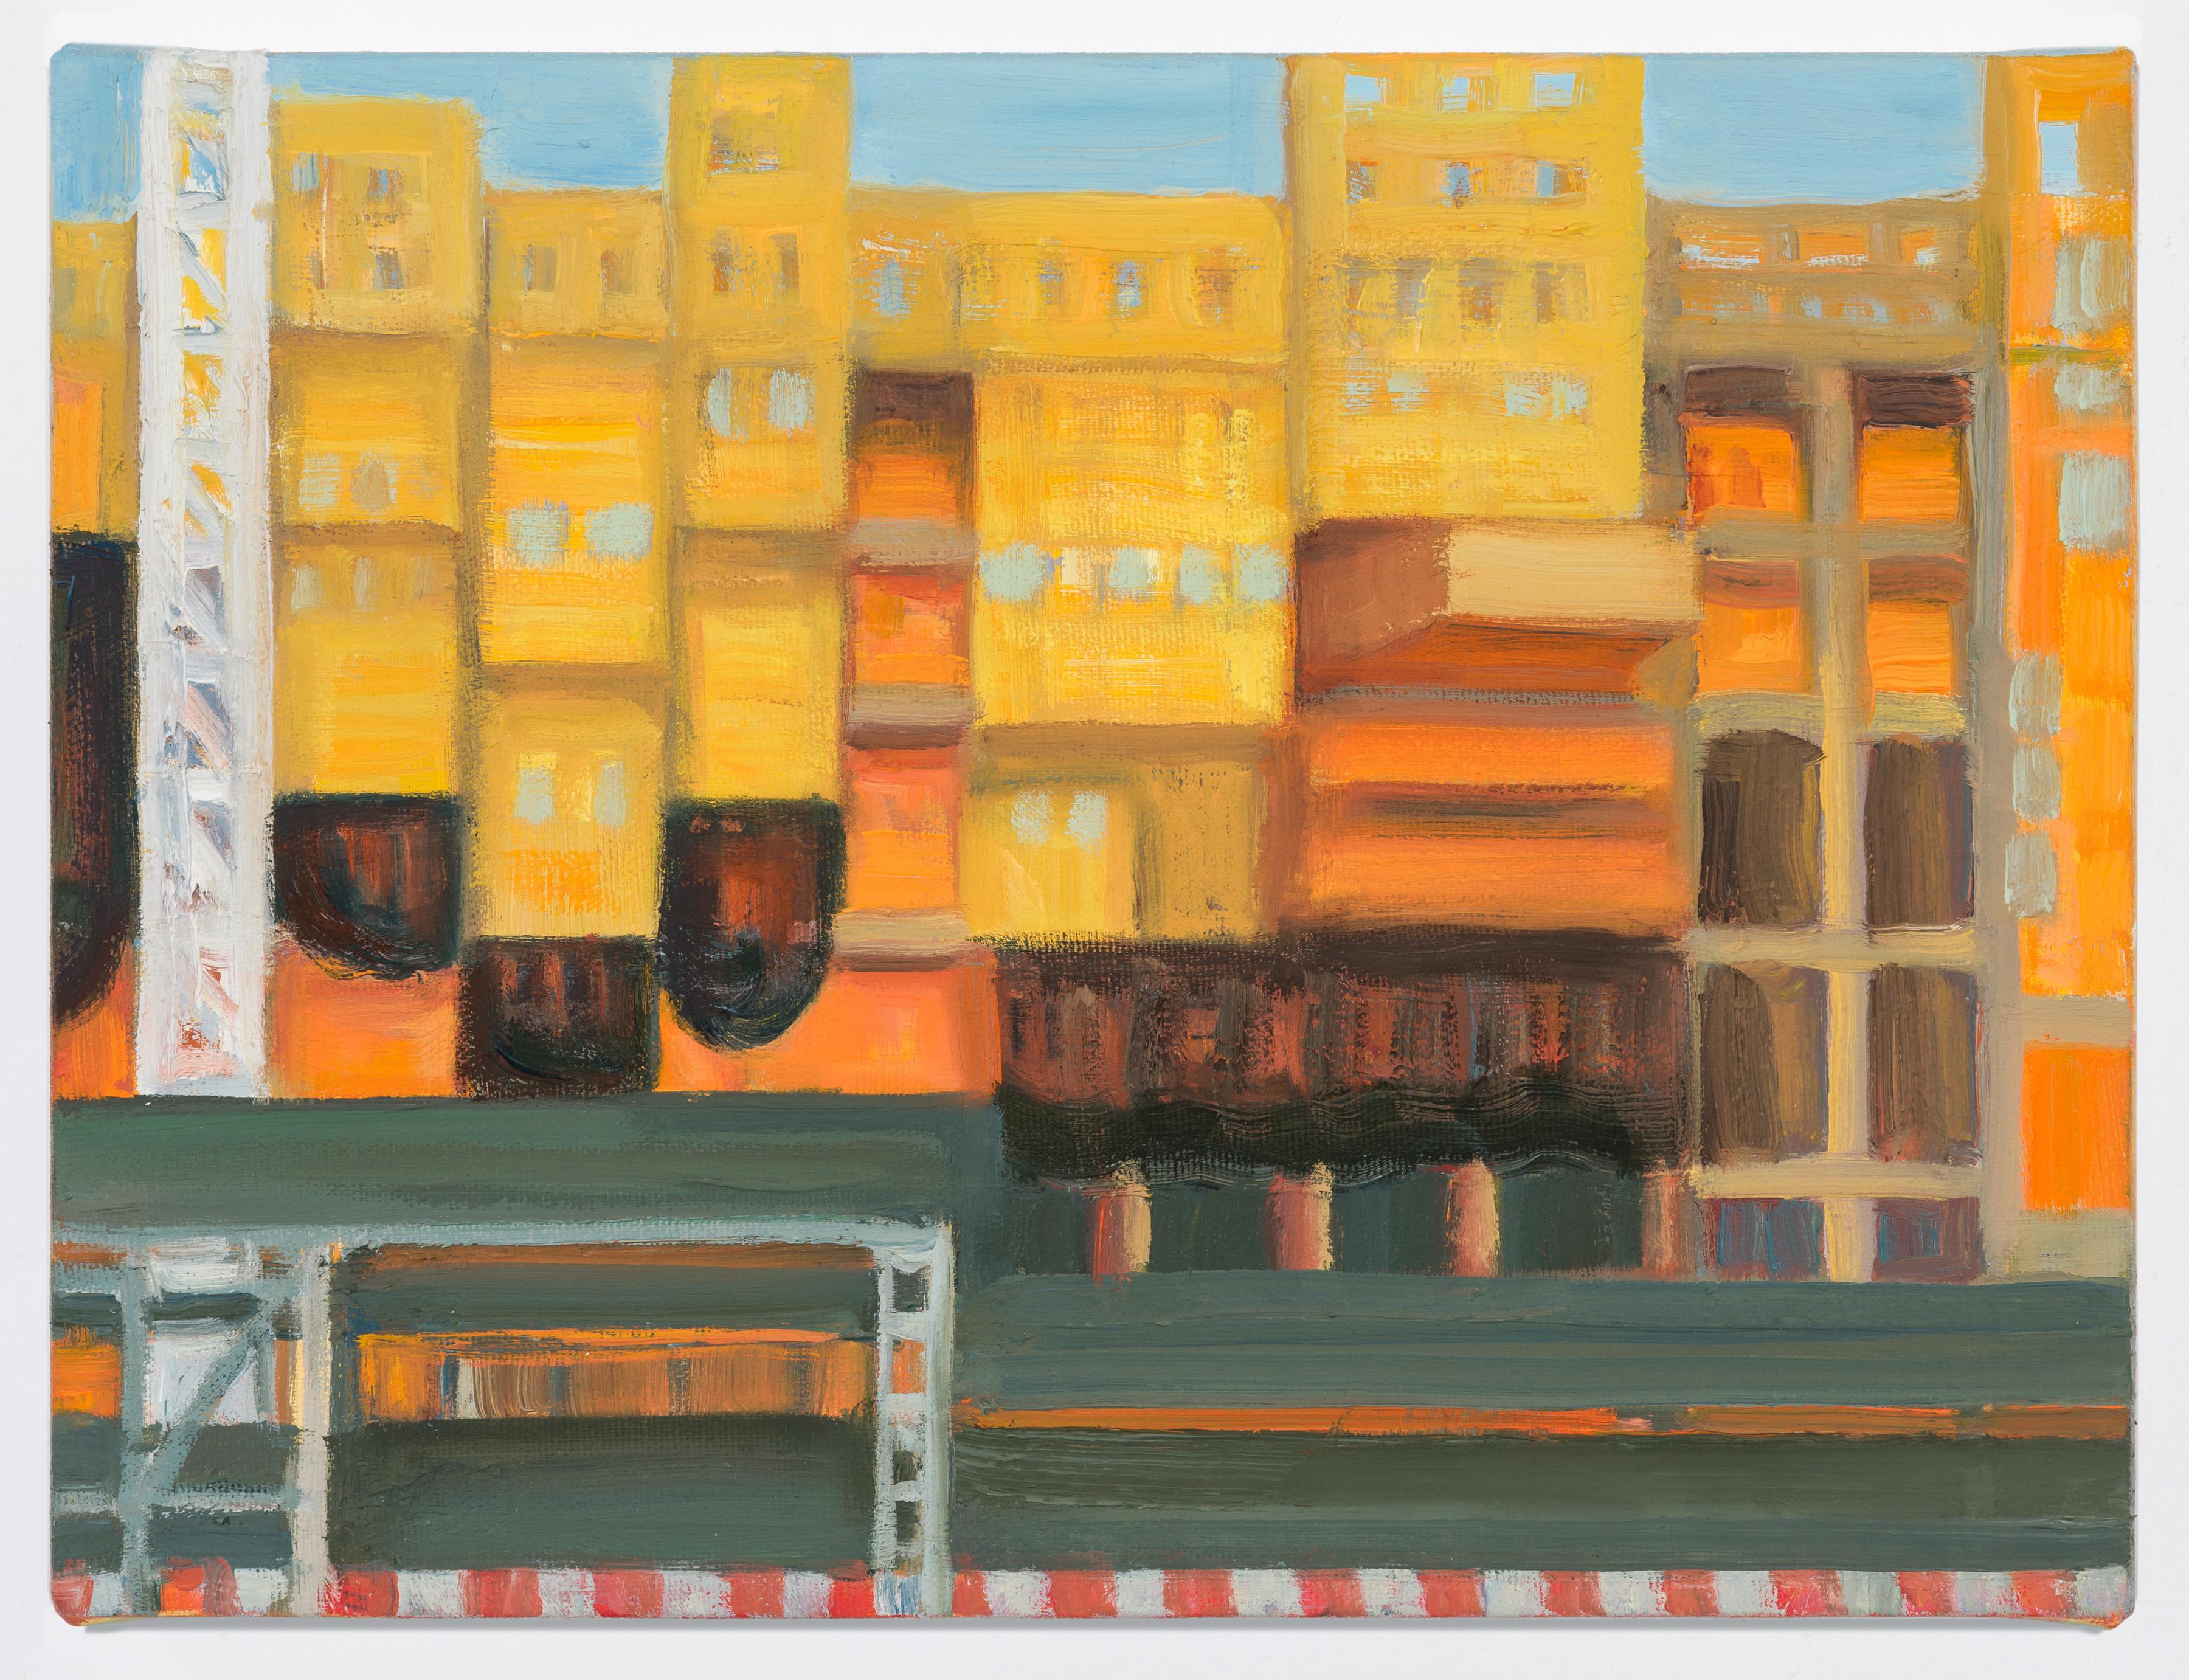 Landscape Painting Gwyneth Leech - Scaffold Covers n° 2, Upper West Side, peinture de paysage urbain impressionniste